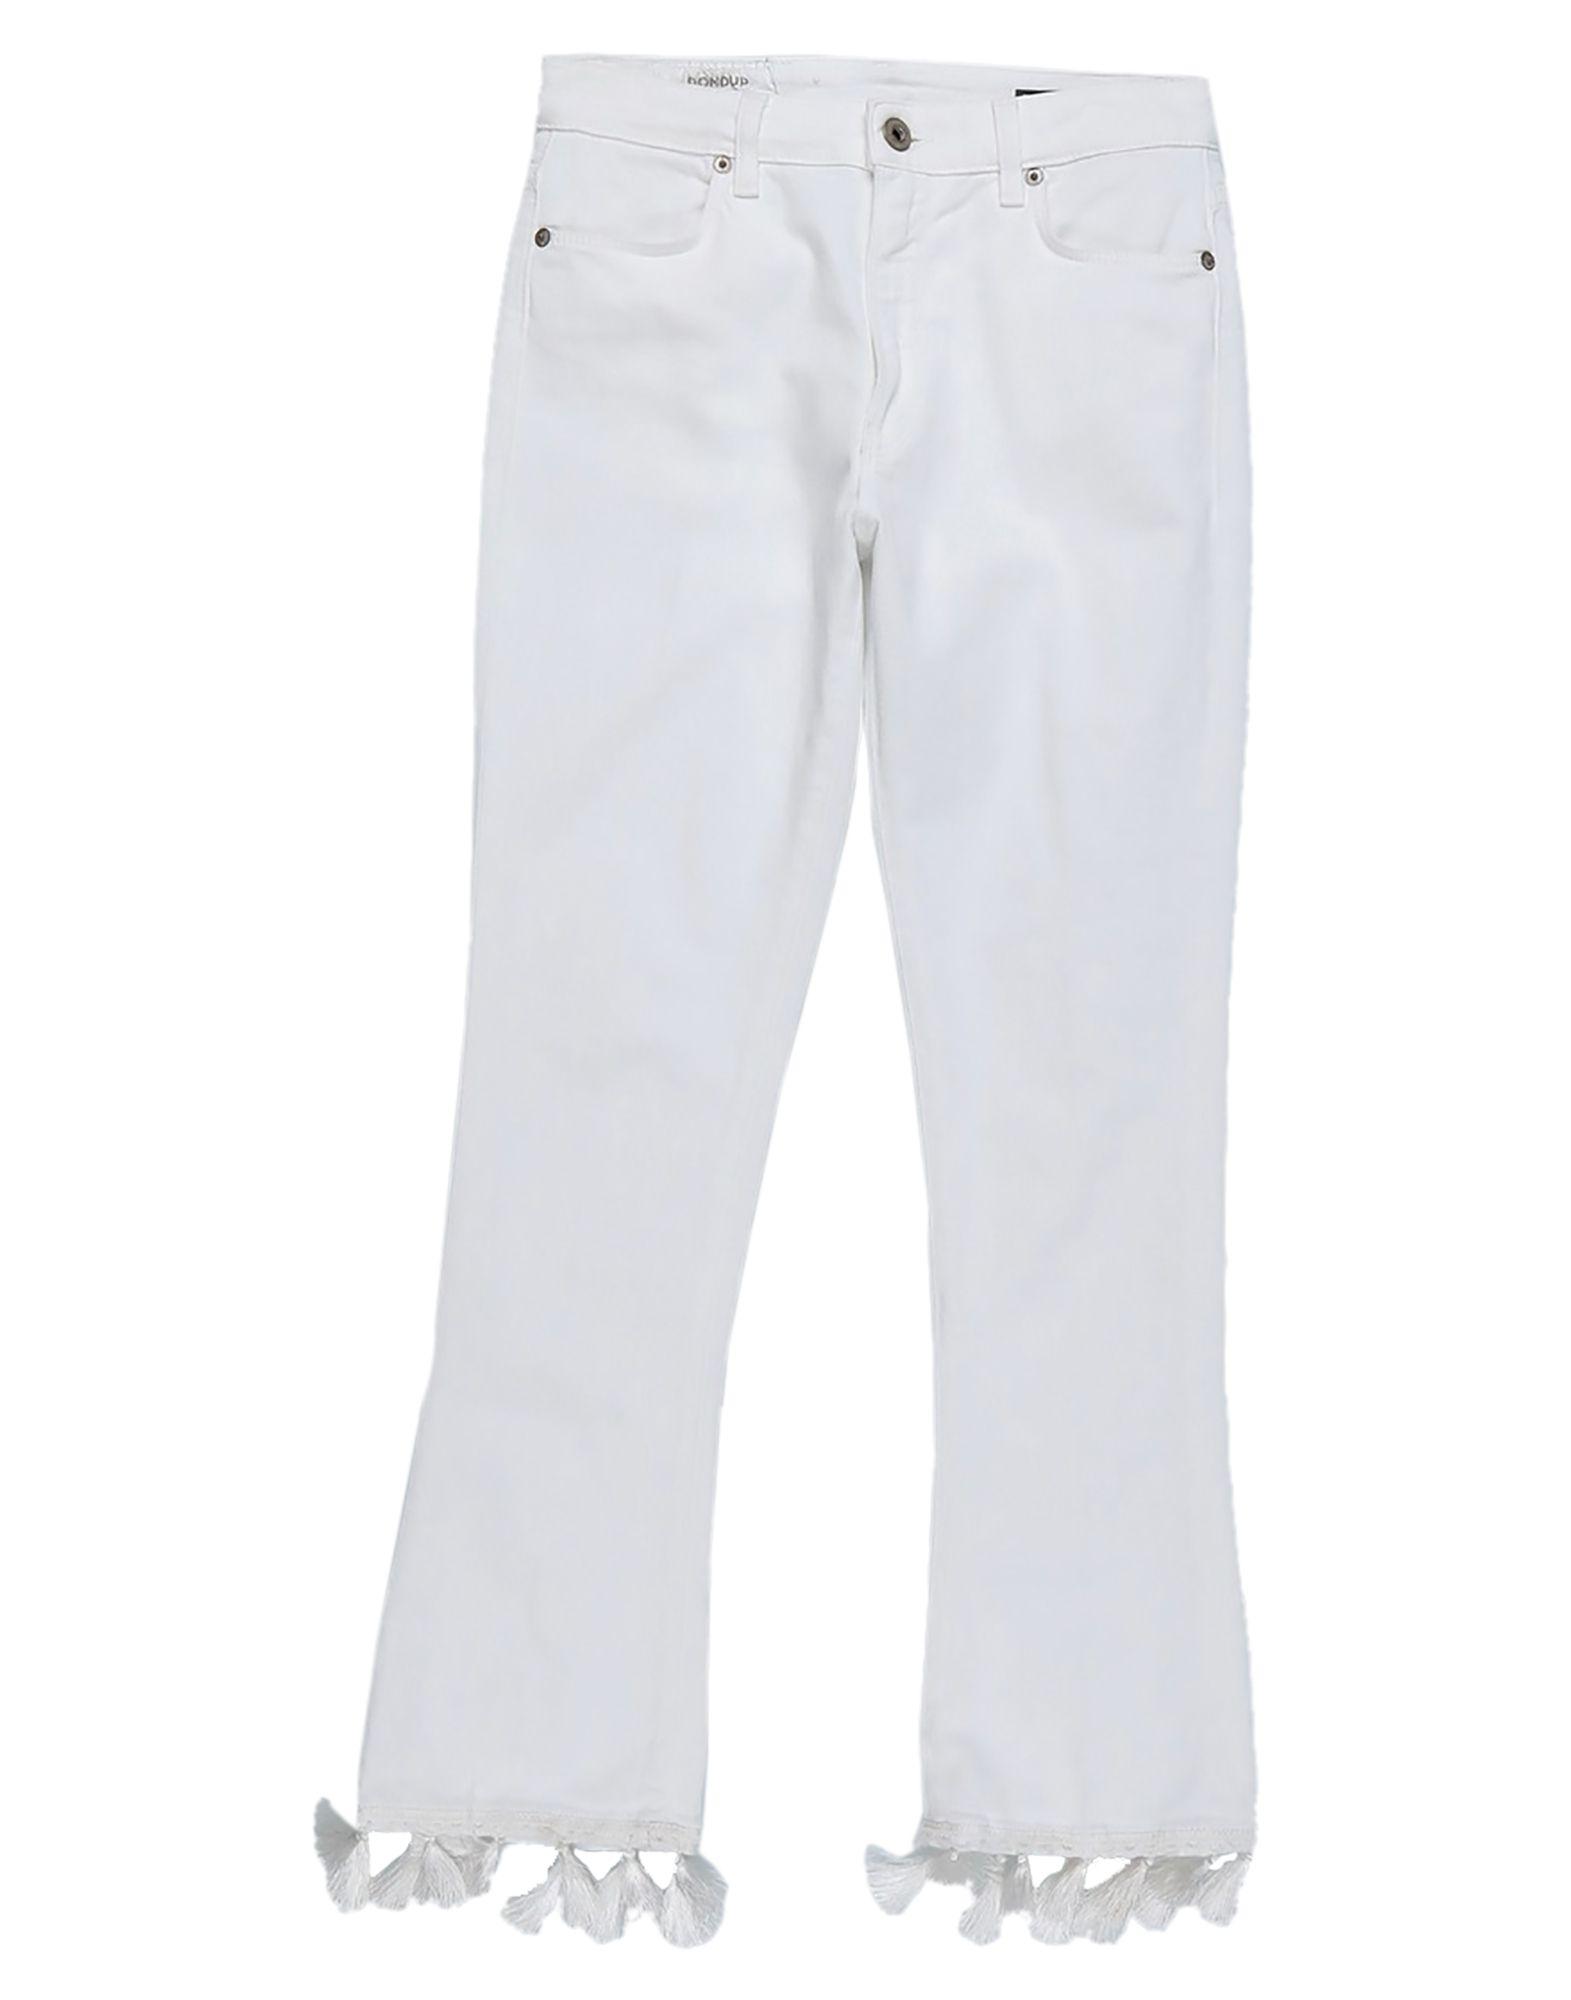 Dondup Denim Pants in White - Lyst